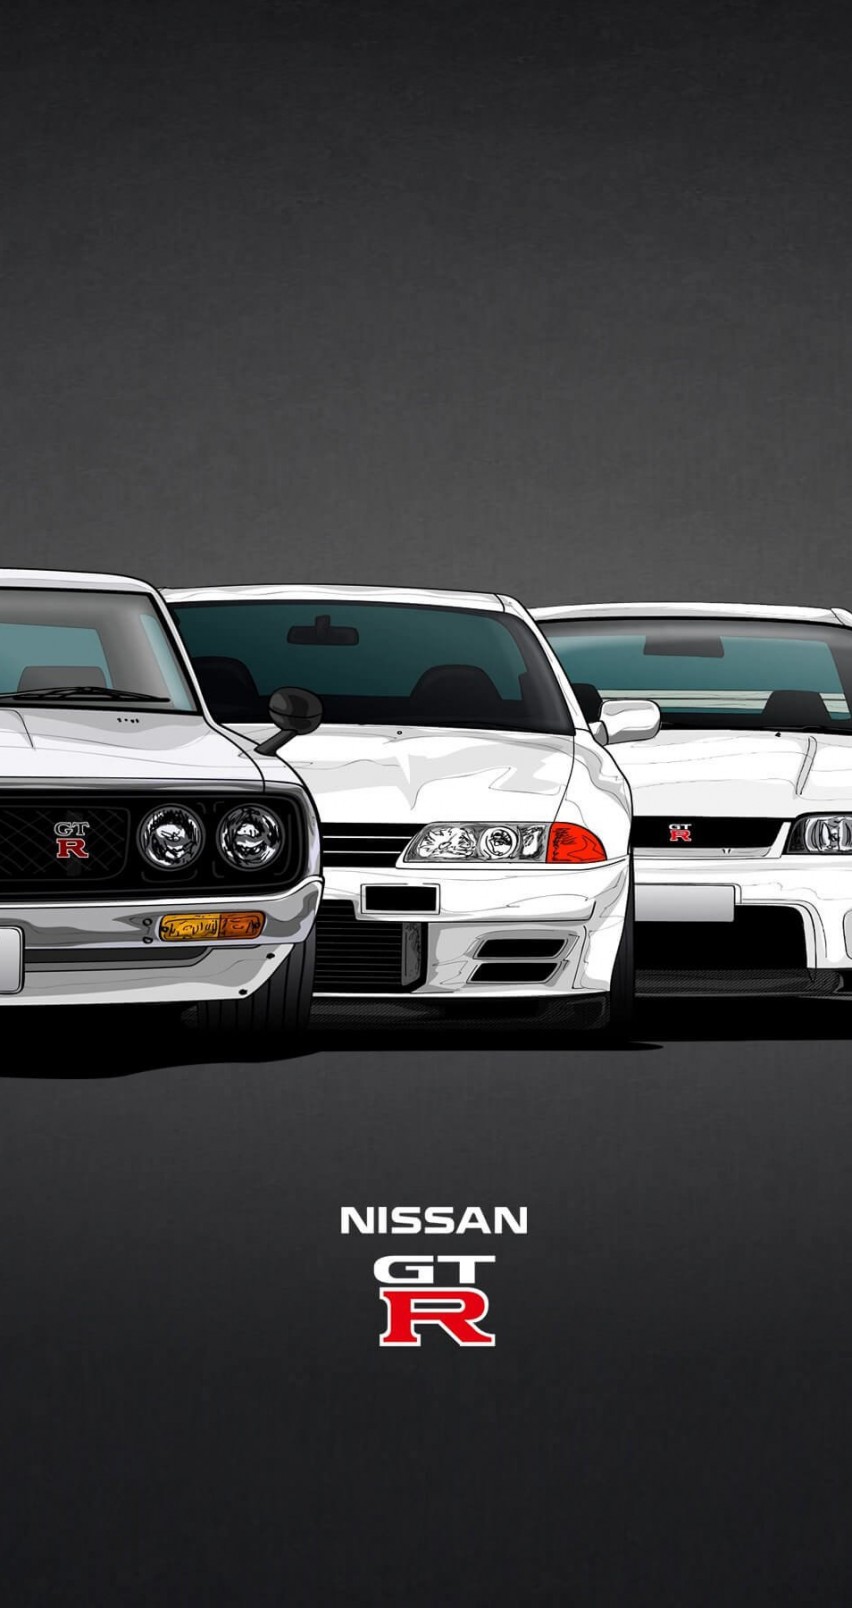 Nissan Skyline GT-R Evolution Wallpaper for Apple iPhone 6 / 6s